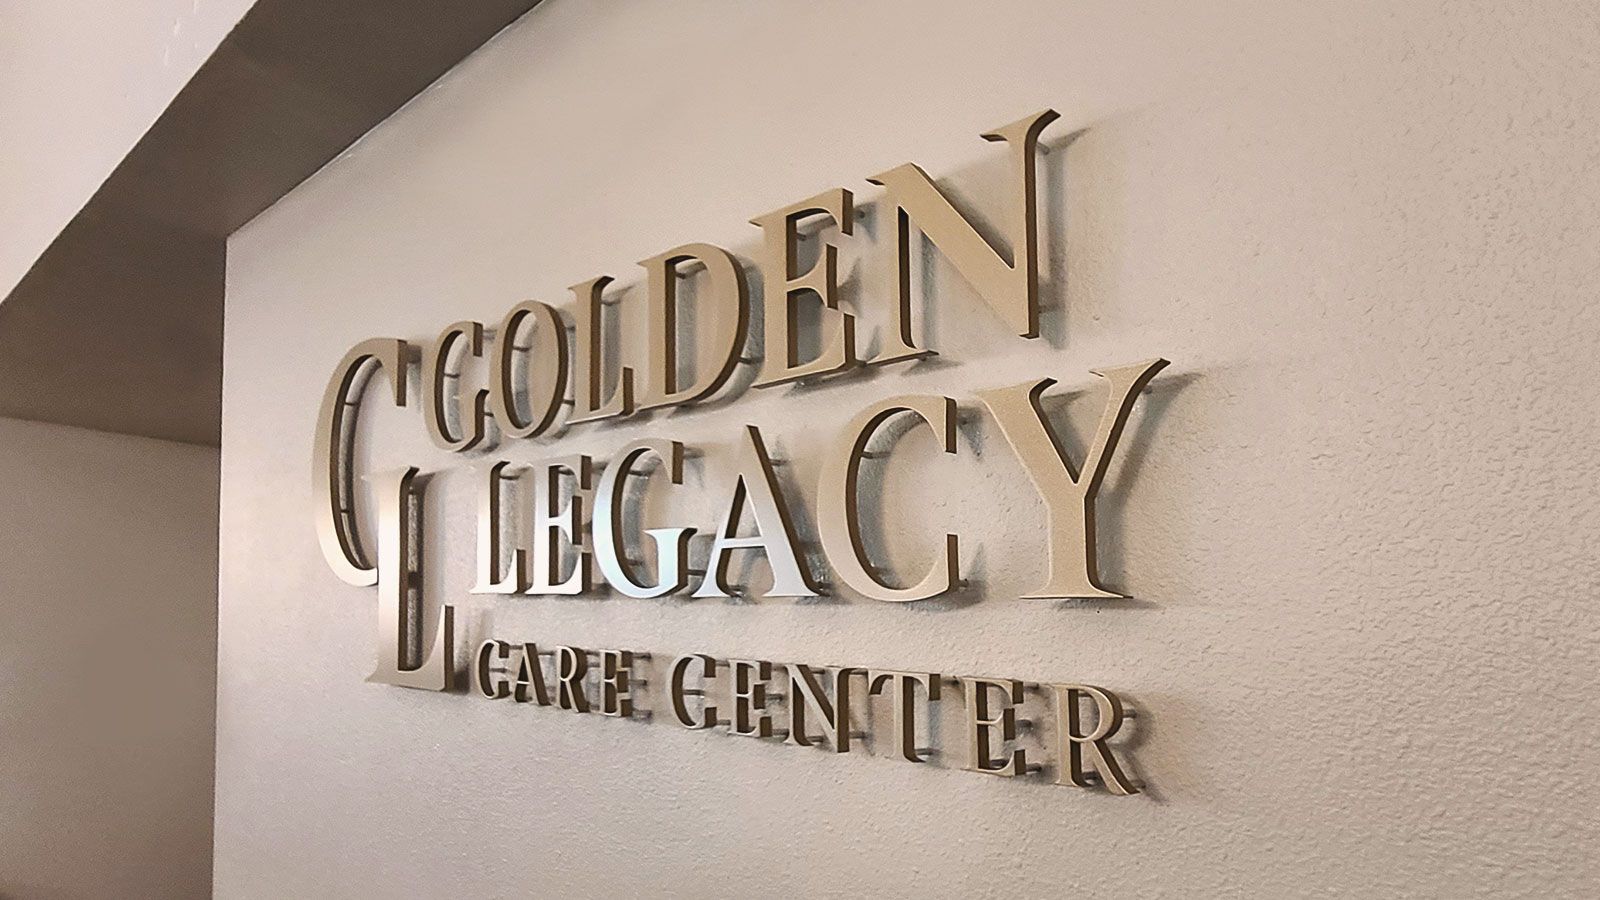 Golden Legacy office 3D sign